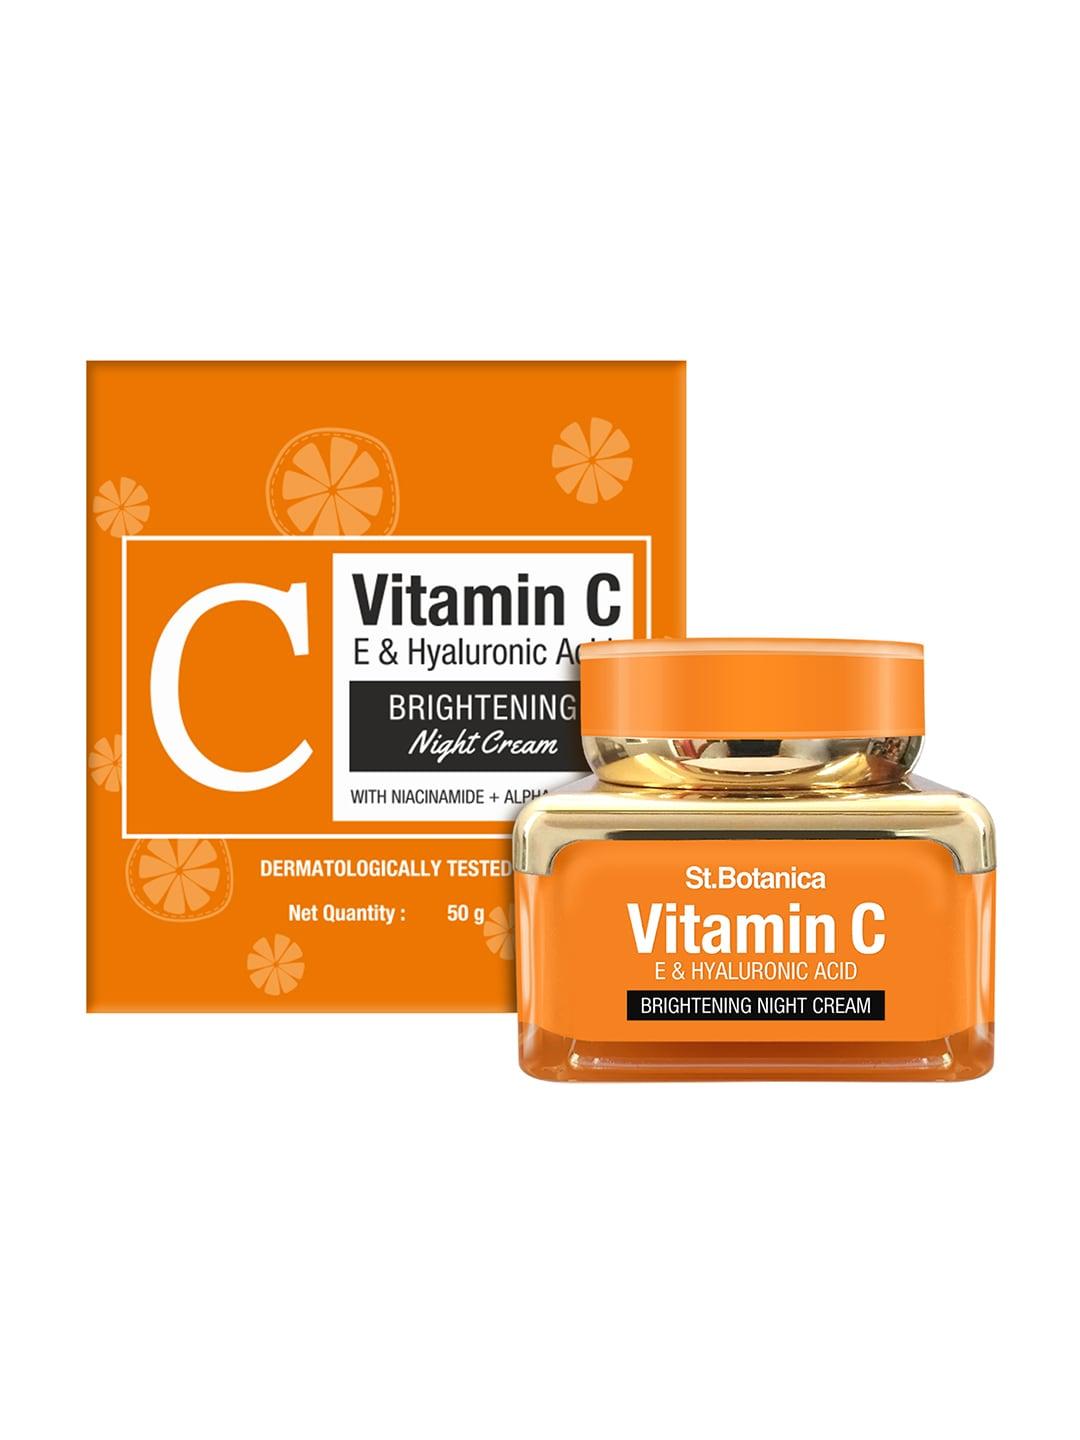 StBotanica Vitamin C & Hyaluronic Acid Brightening Night Cream - 50 g